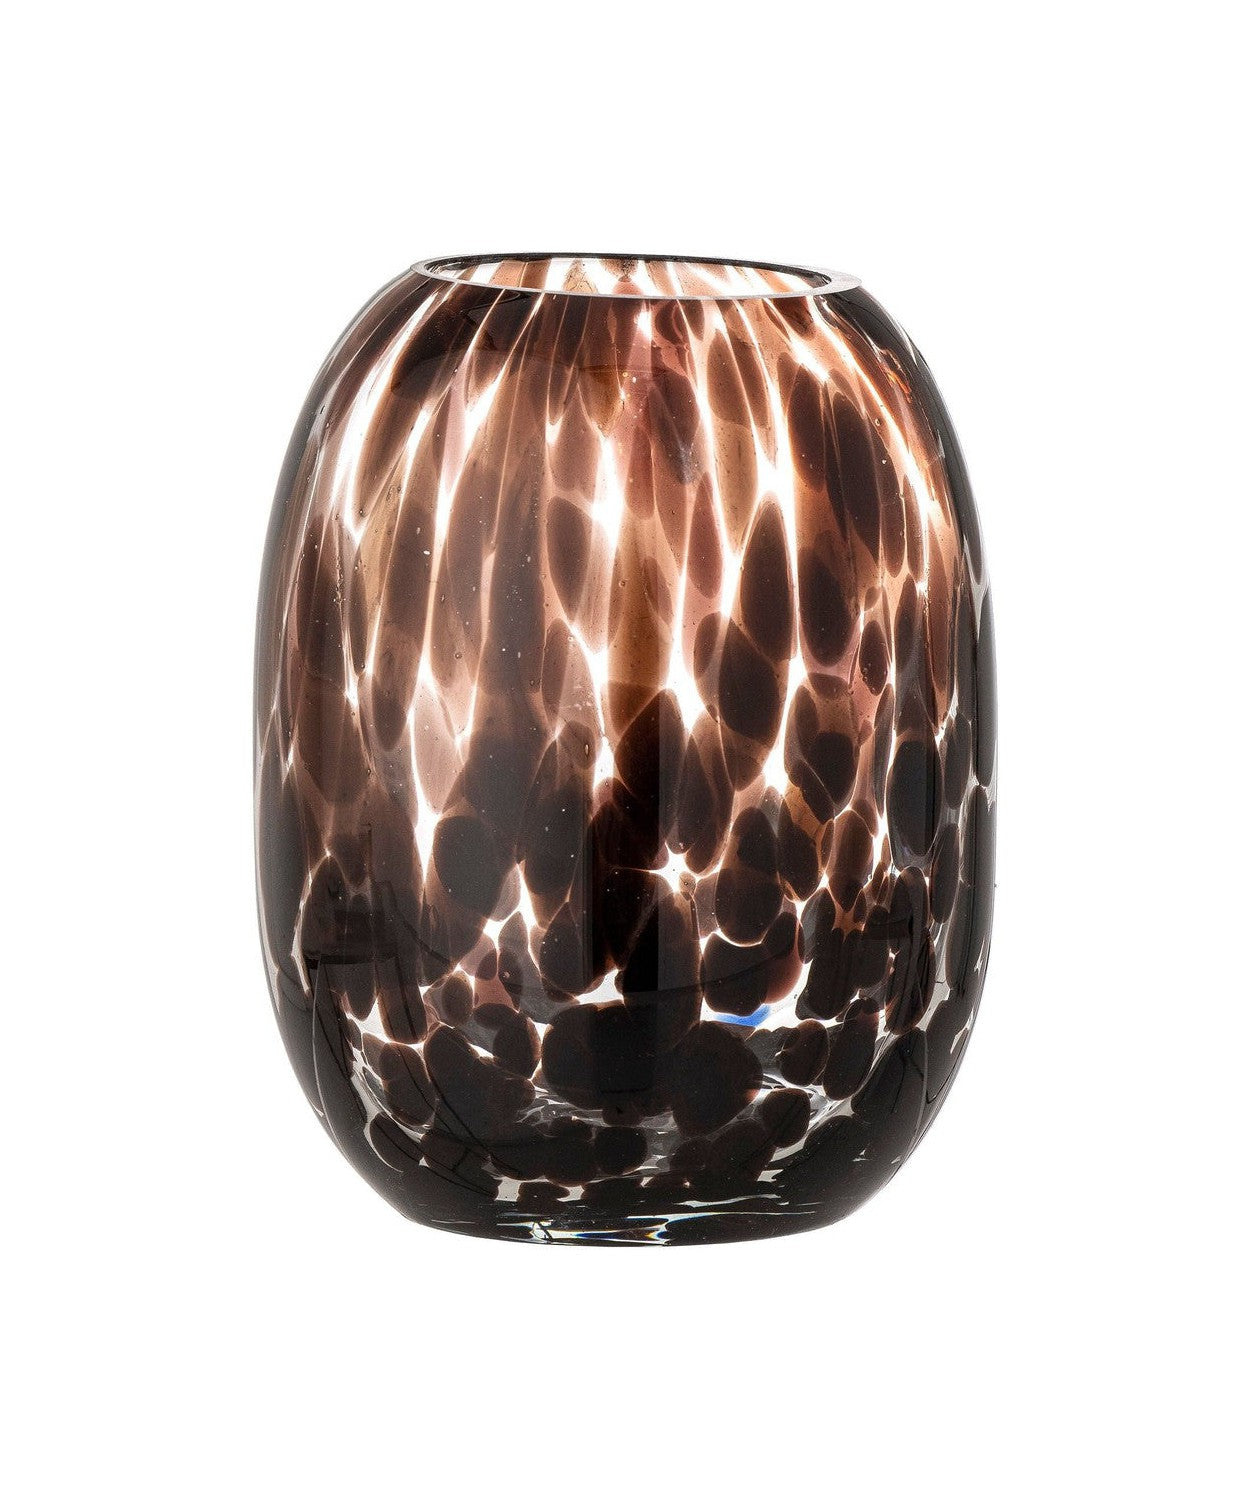 Bloomingville Crister Vase, Brown, Glass